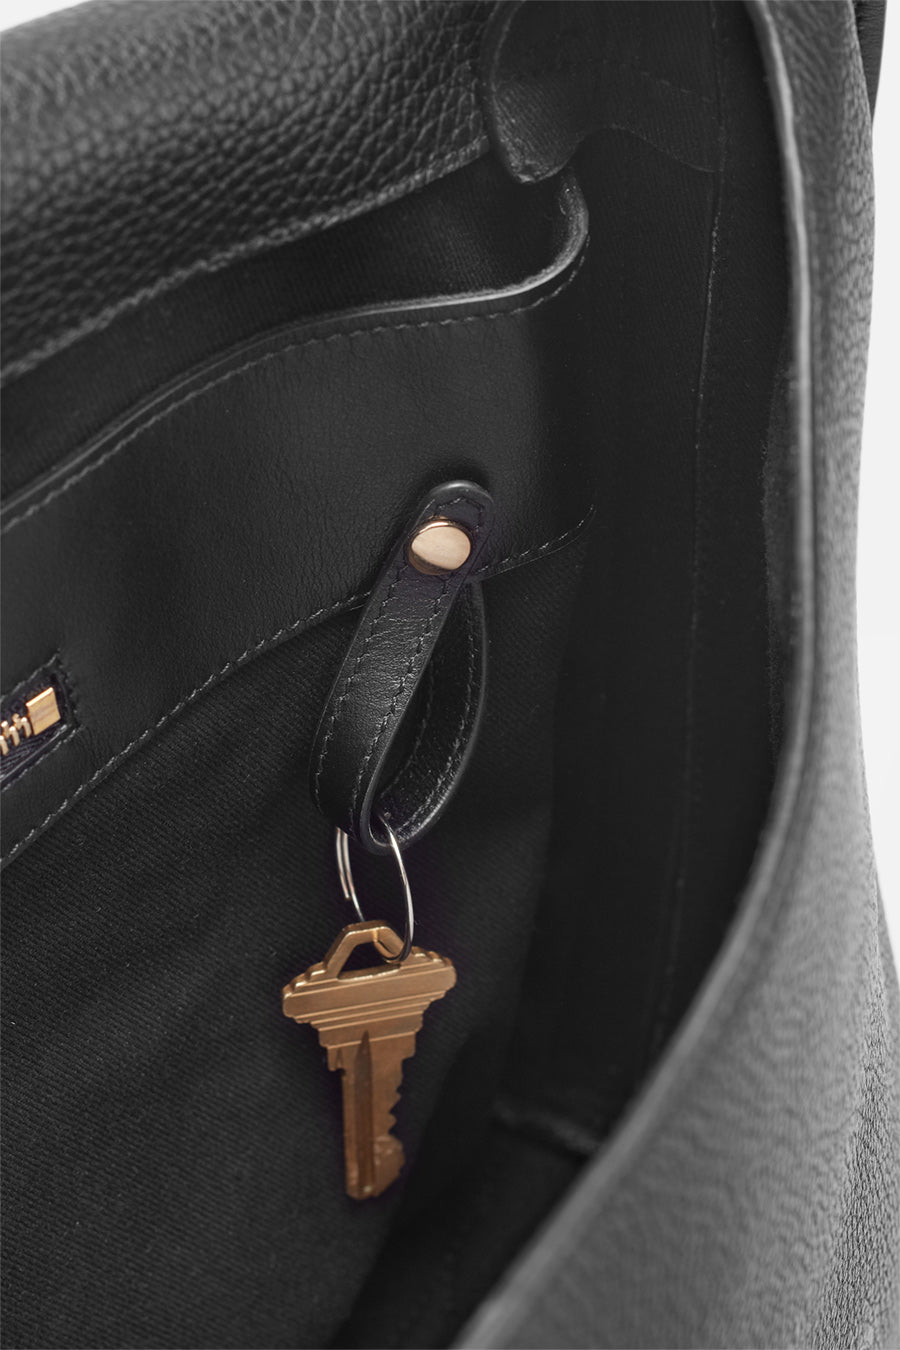 Close-up of a key hanging inside an open bag.